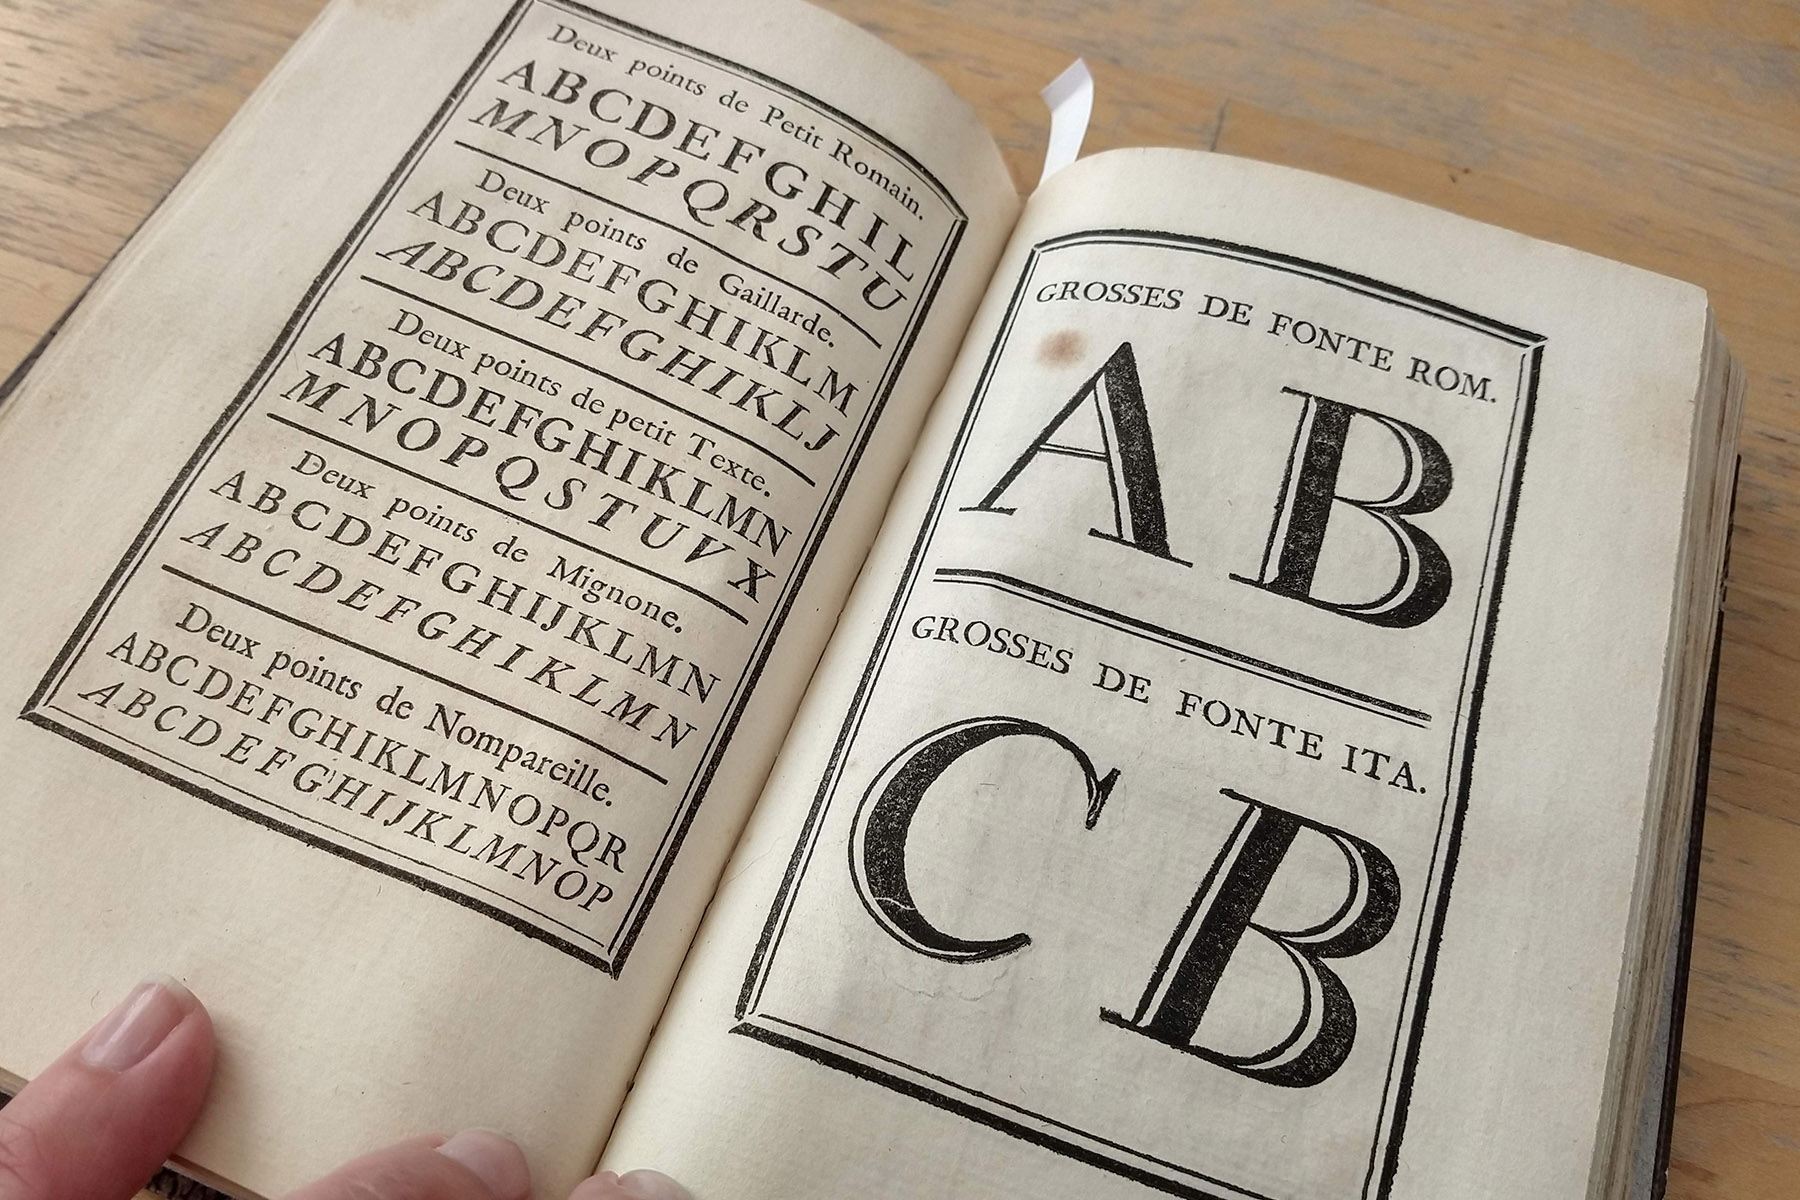 Close up photo of type specimen page; Letterform Archive, San Francisco